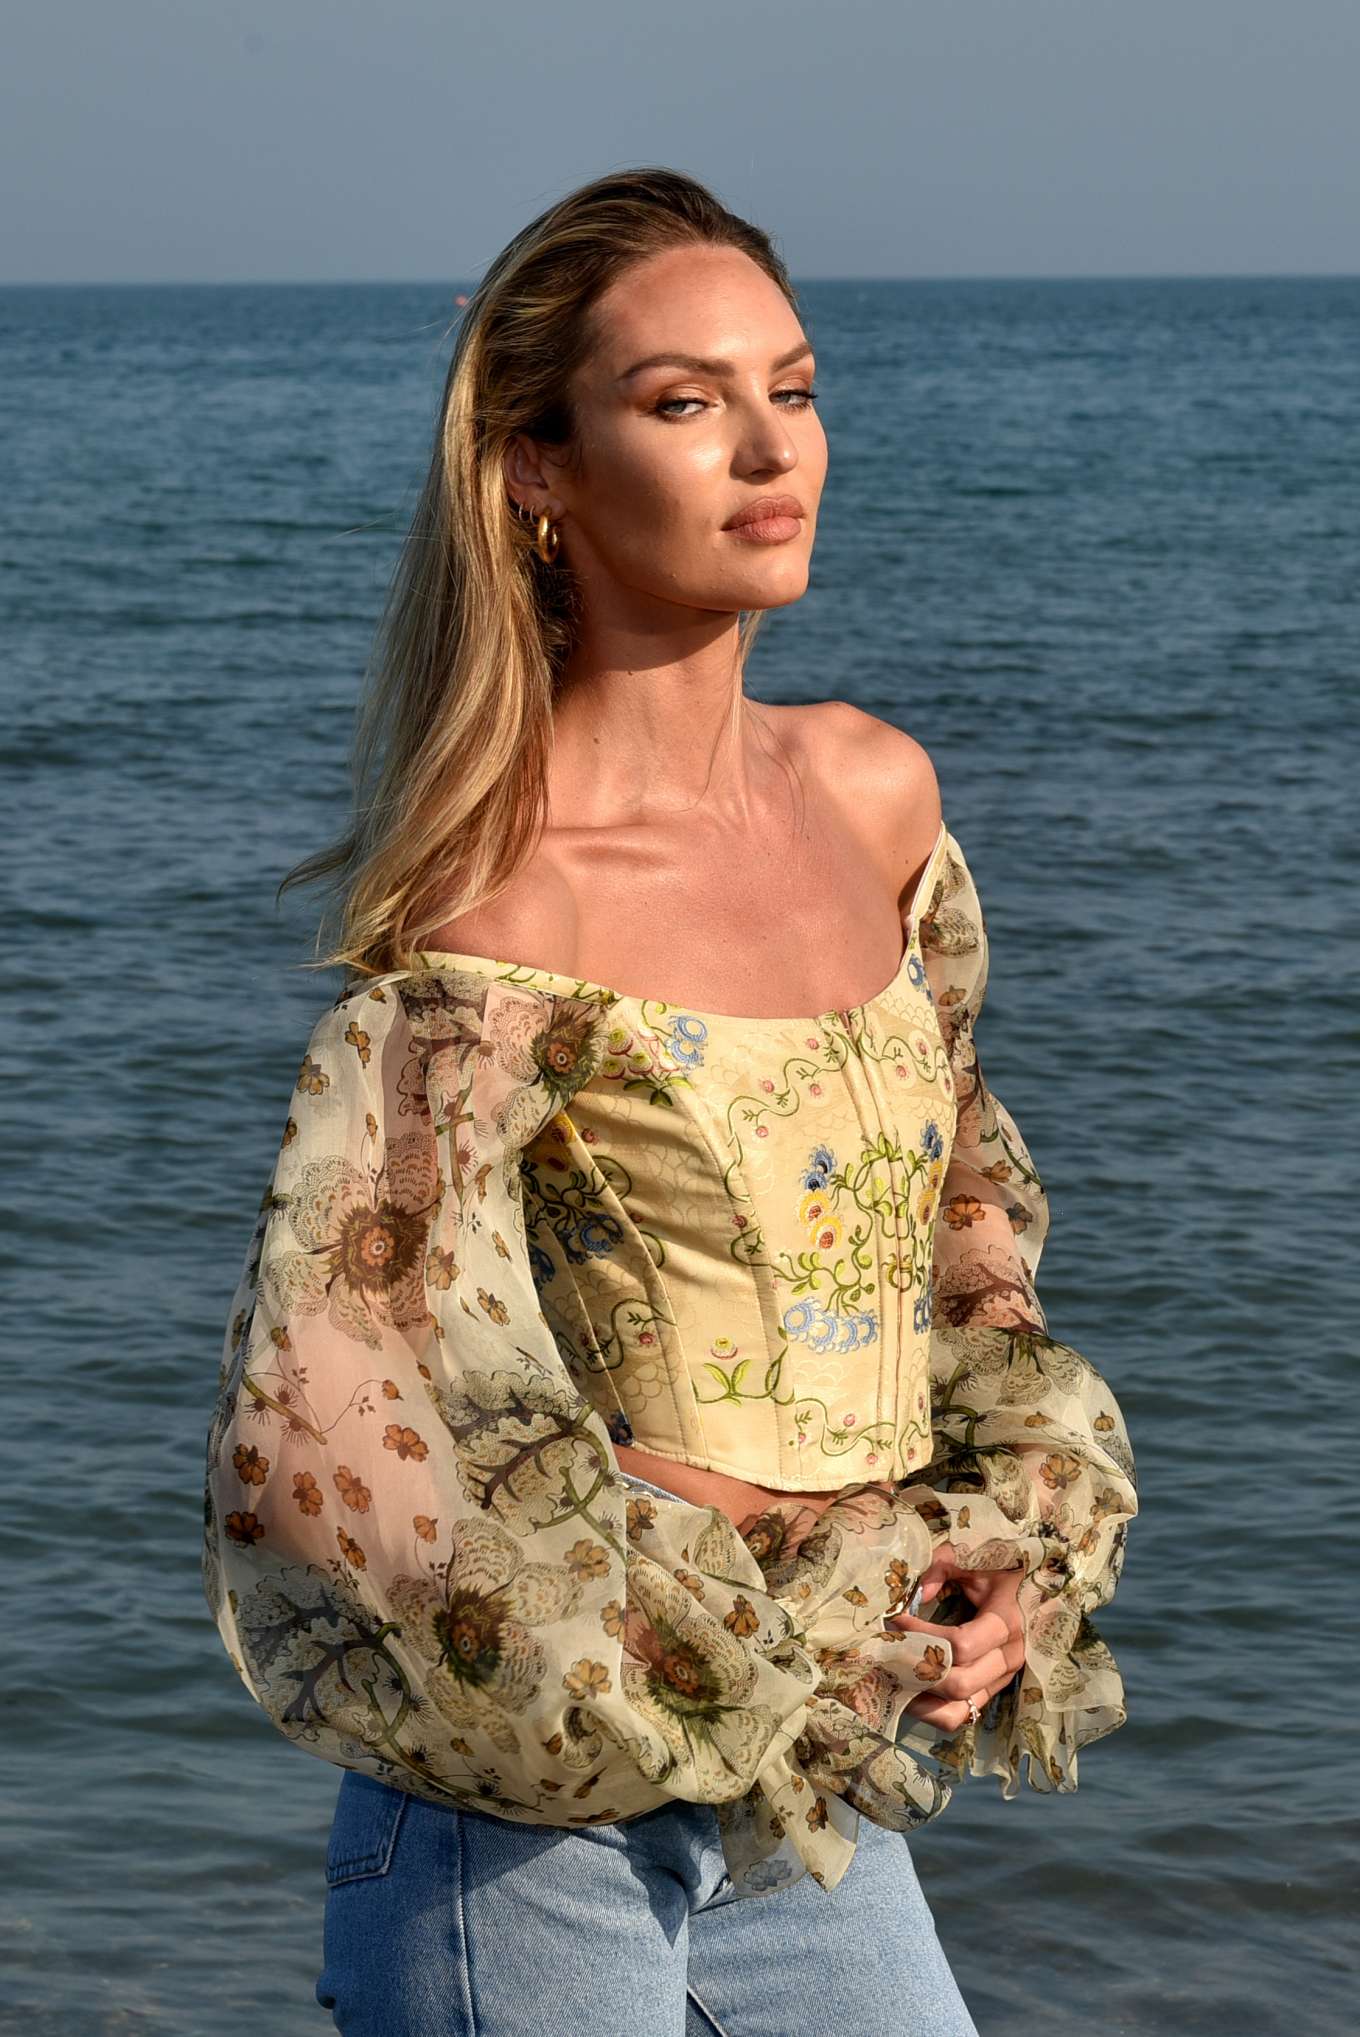 Candice Swanepoel â€“ 2019 Venice Film Festival photoshoot